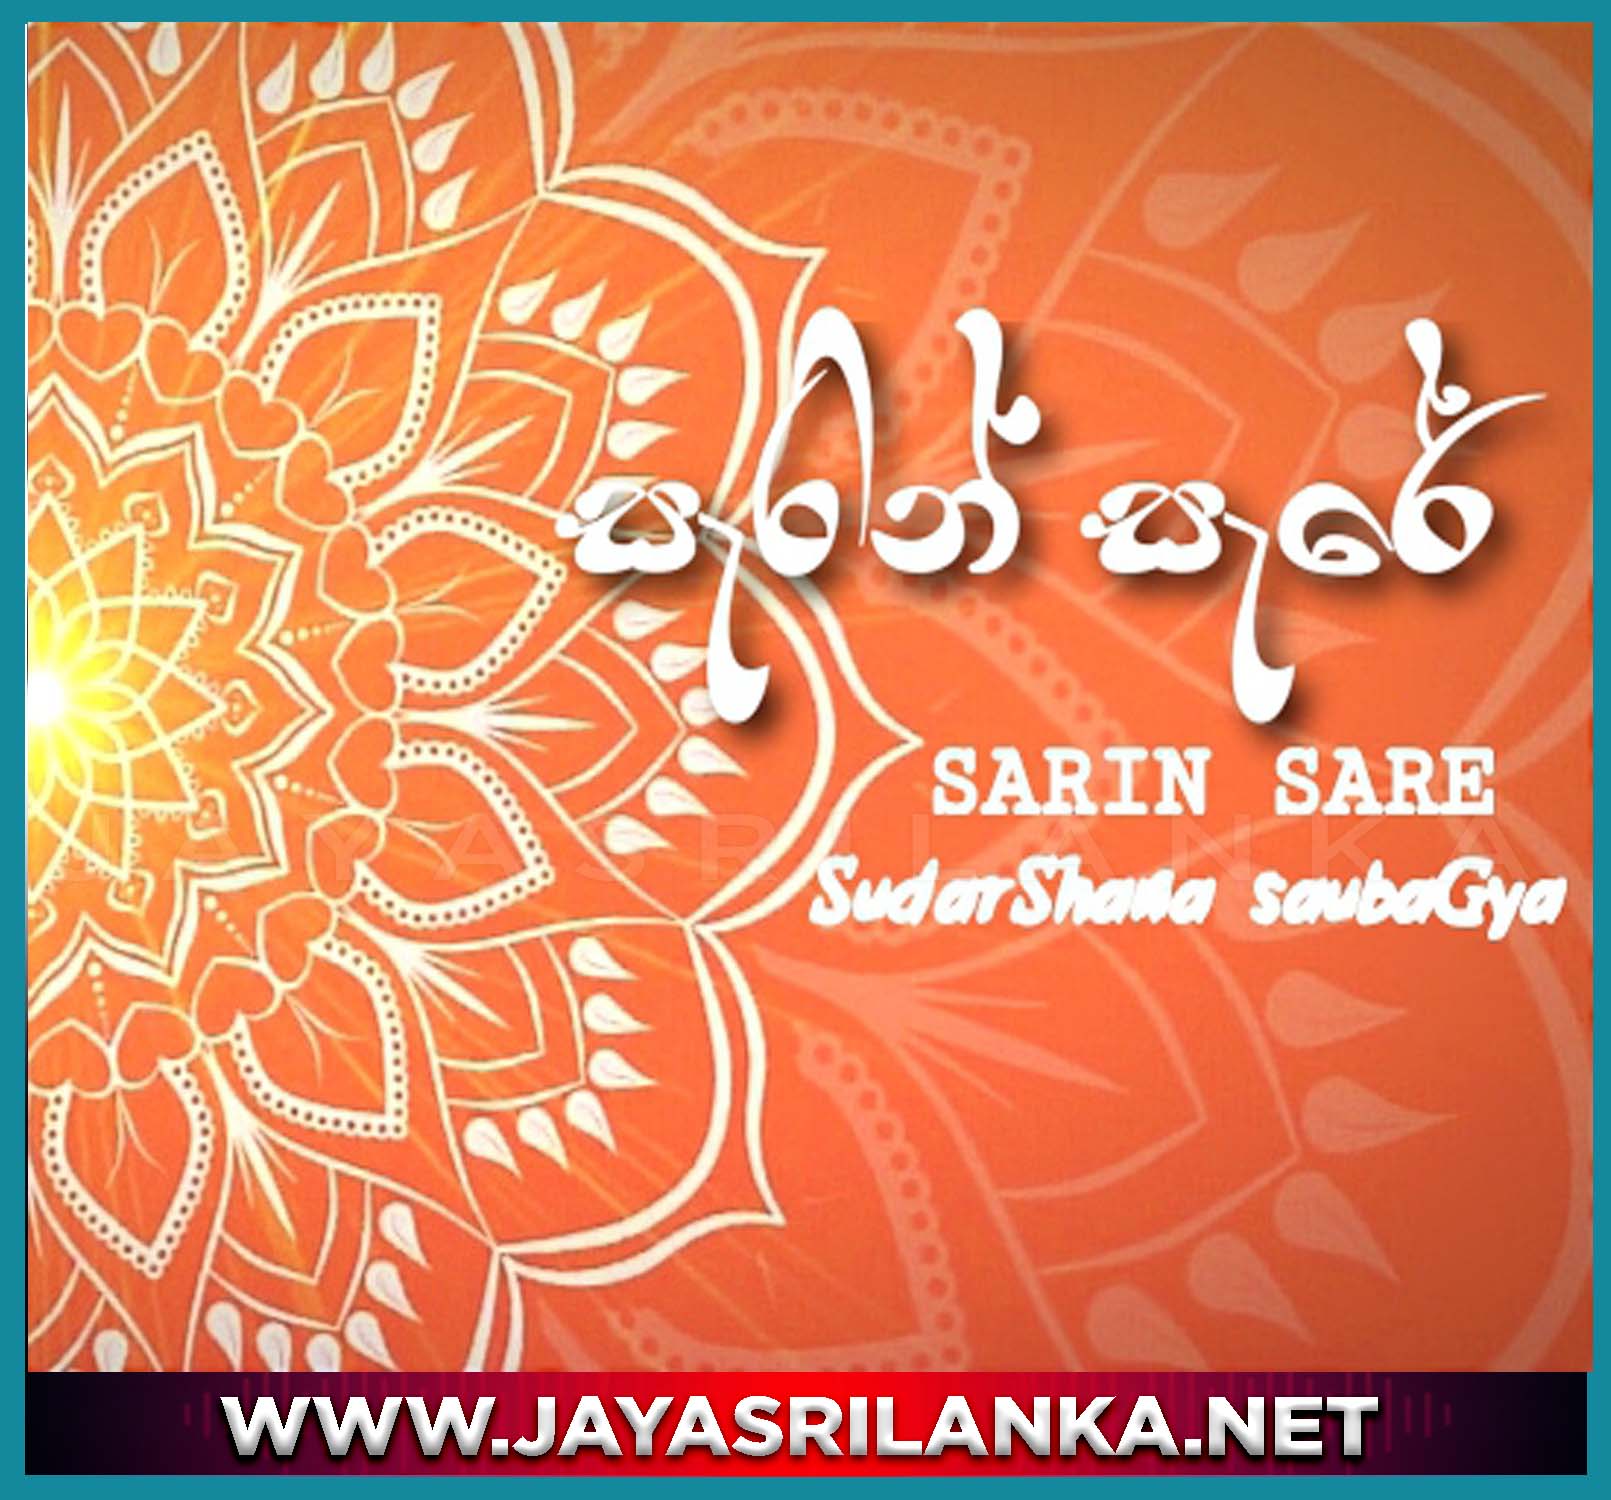 jayasrilanka ~ Sarin Sare - SudarShana SaubaGya